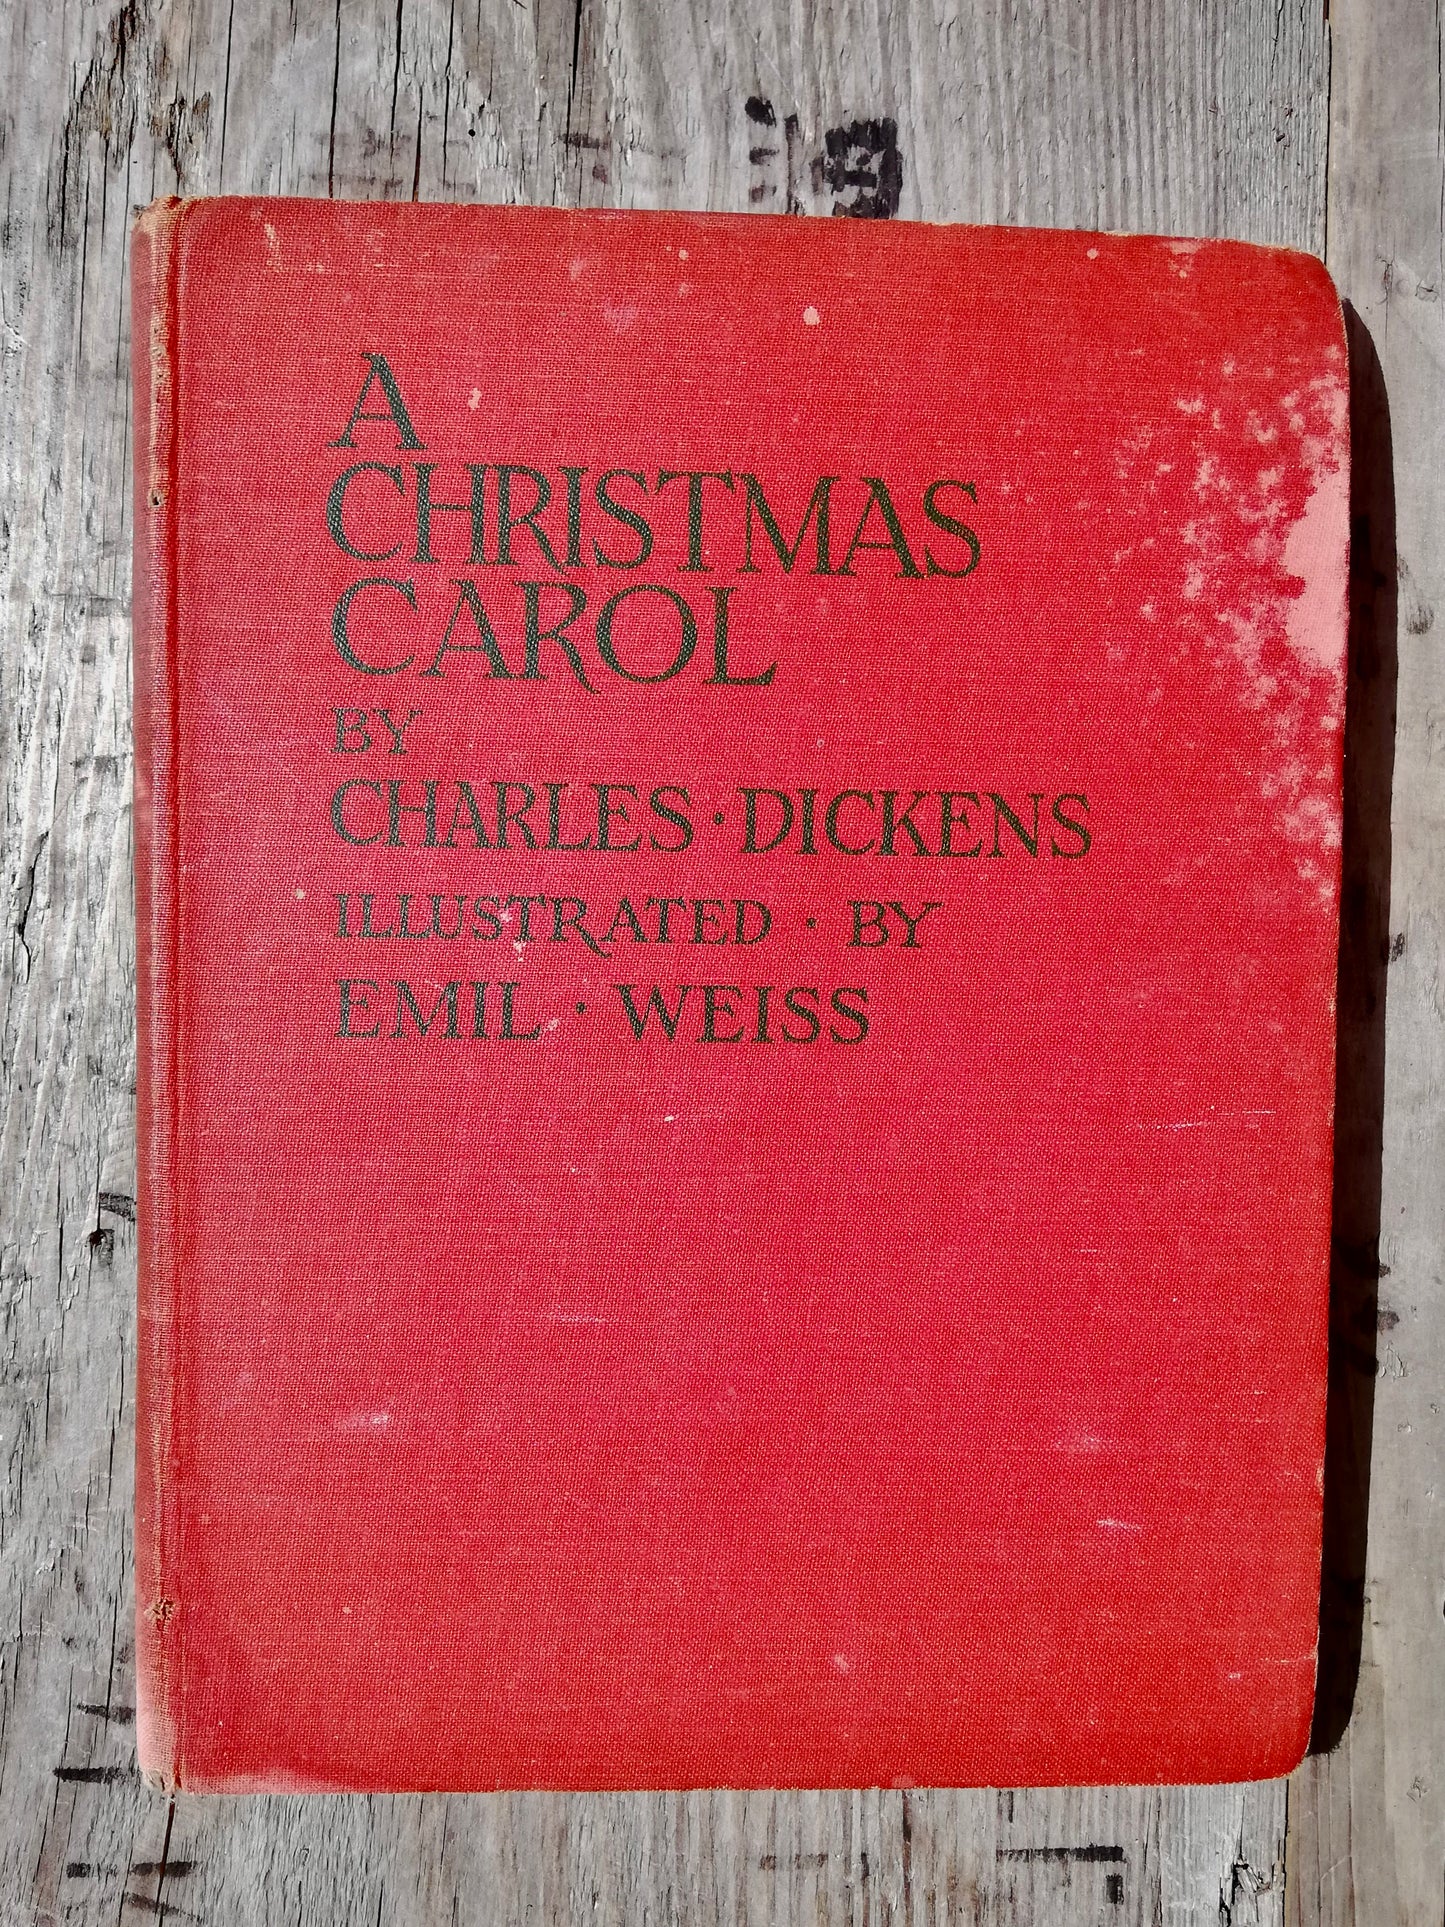 Lovely 1945 copy of A Christmas Carol